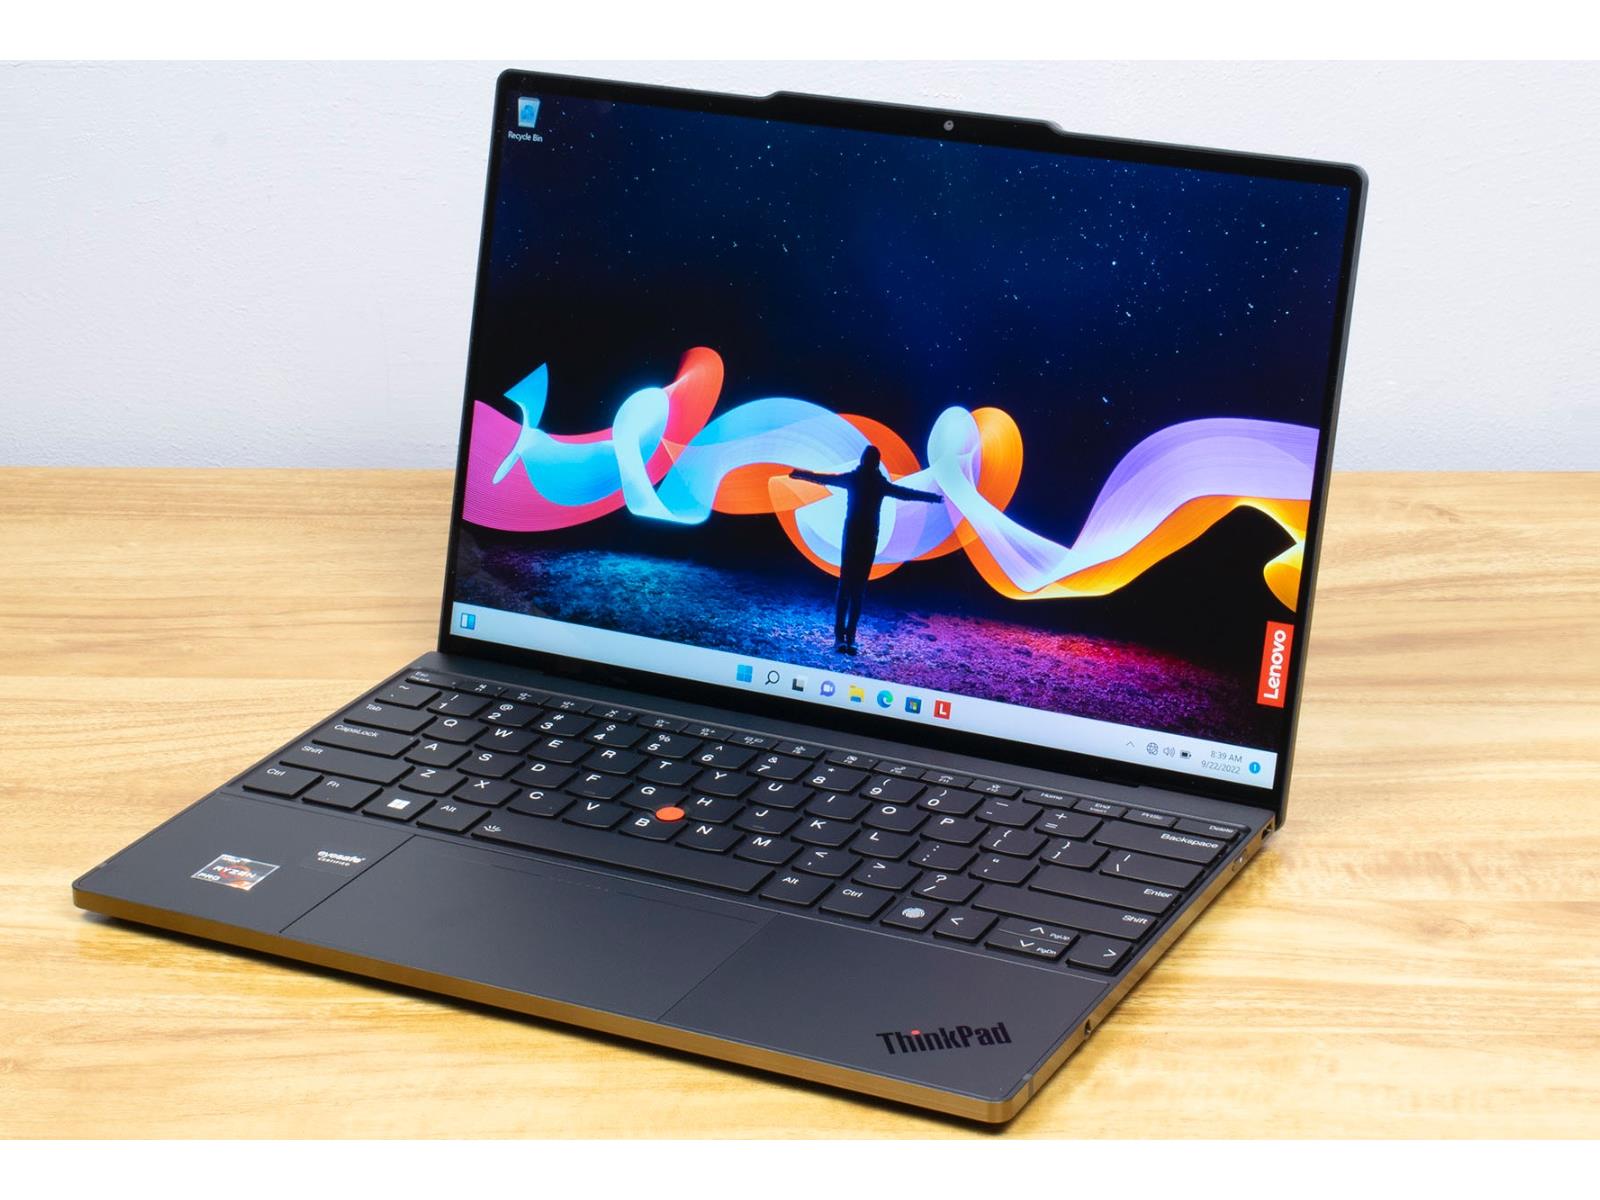 Lenovo ThinkPad Z13 Review: A Sleek, Fast Ryzen Pro Laptop | HotHardware